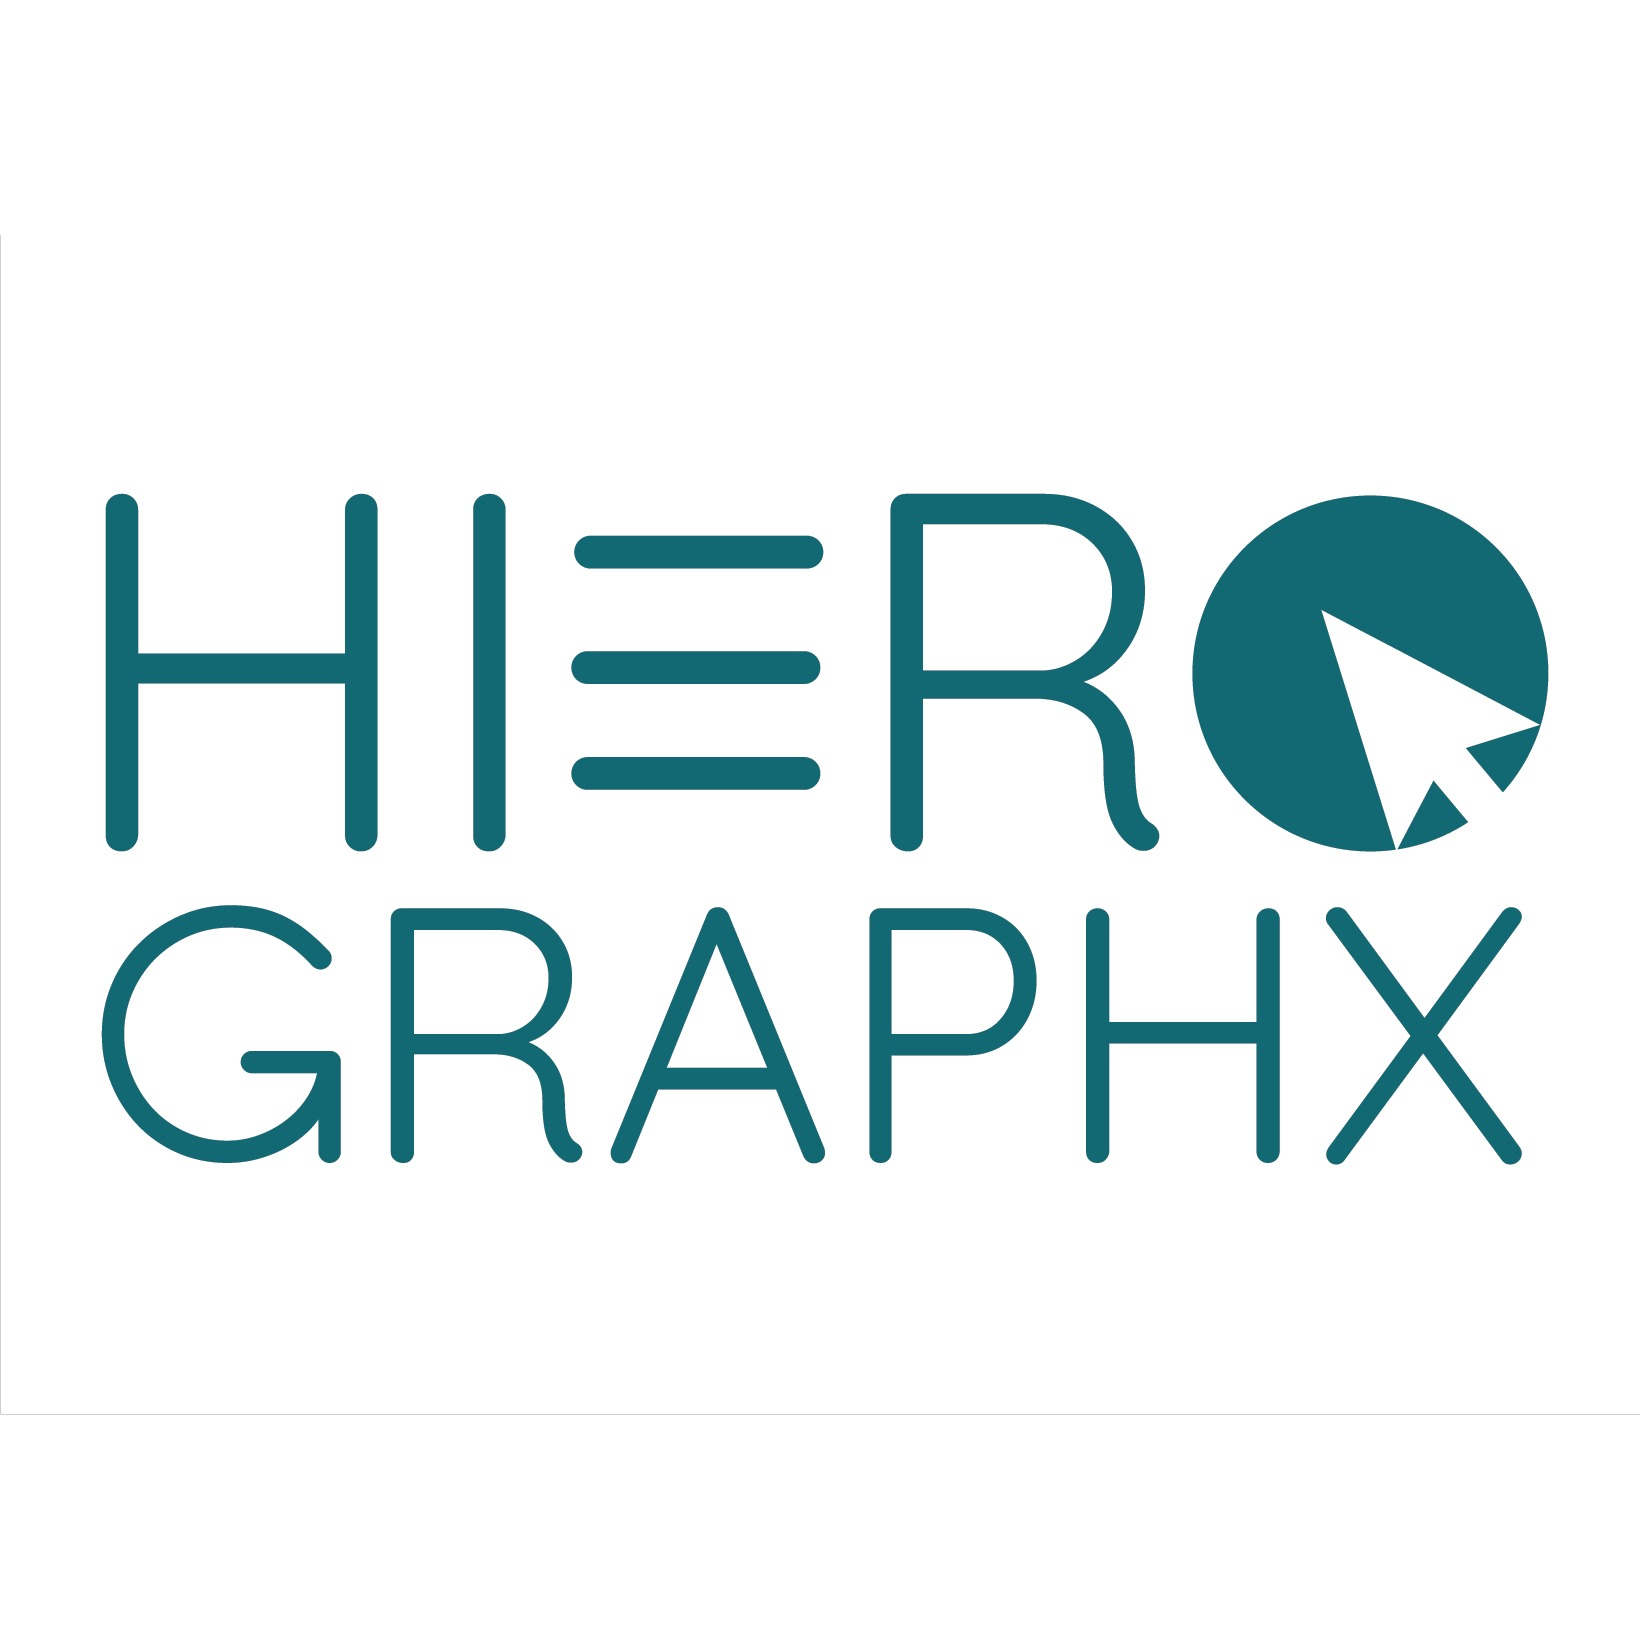 Hierographx - The Mobile App, Software Development and Web Design Company